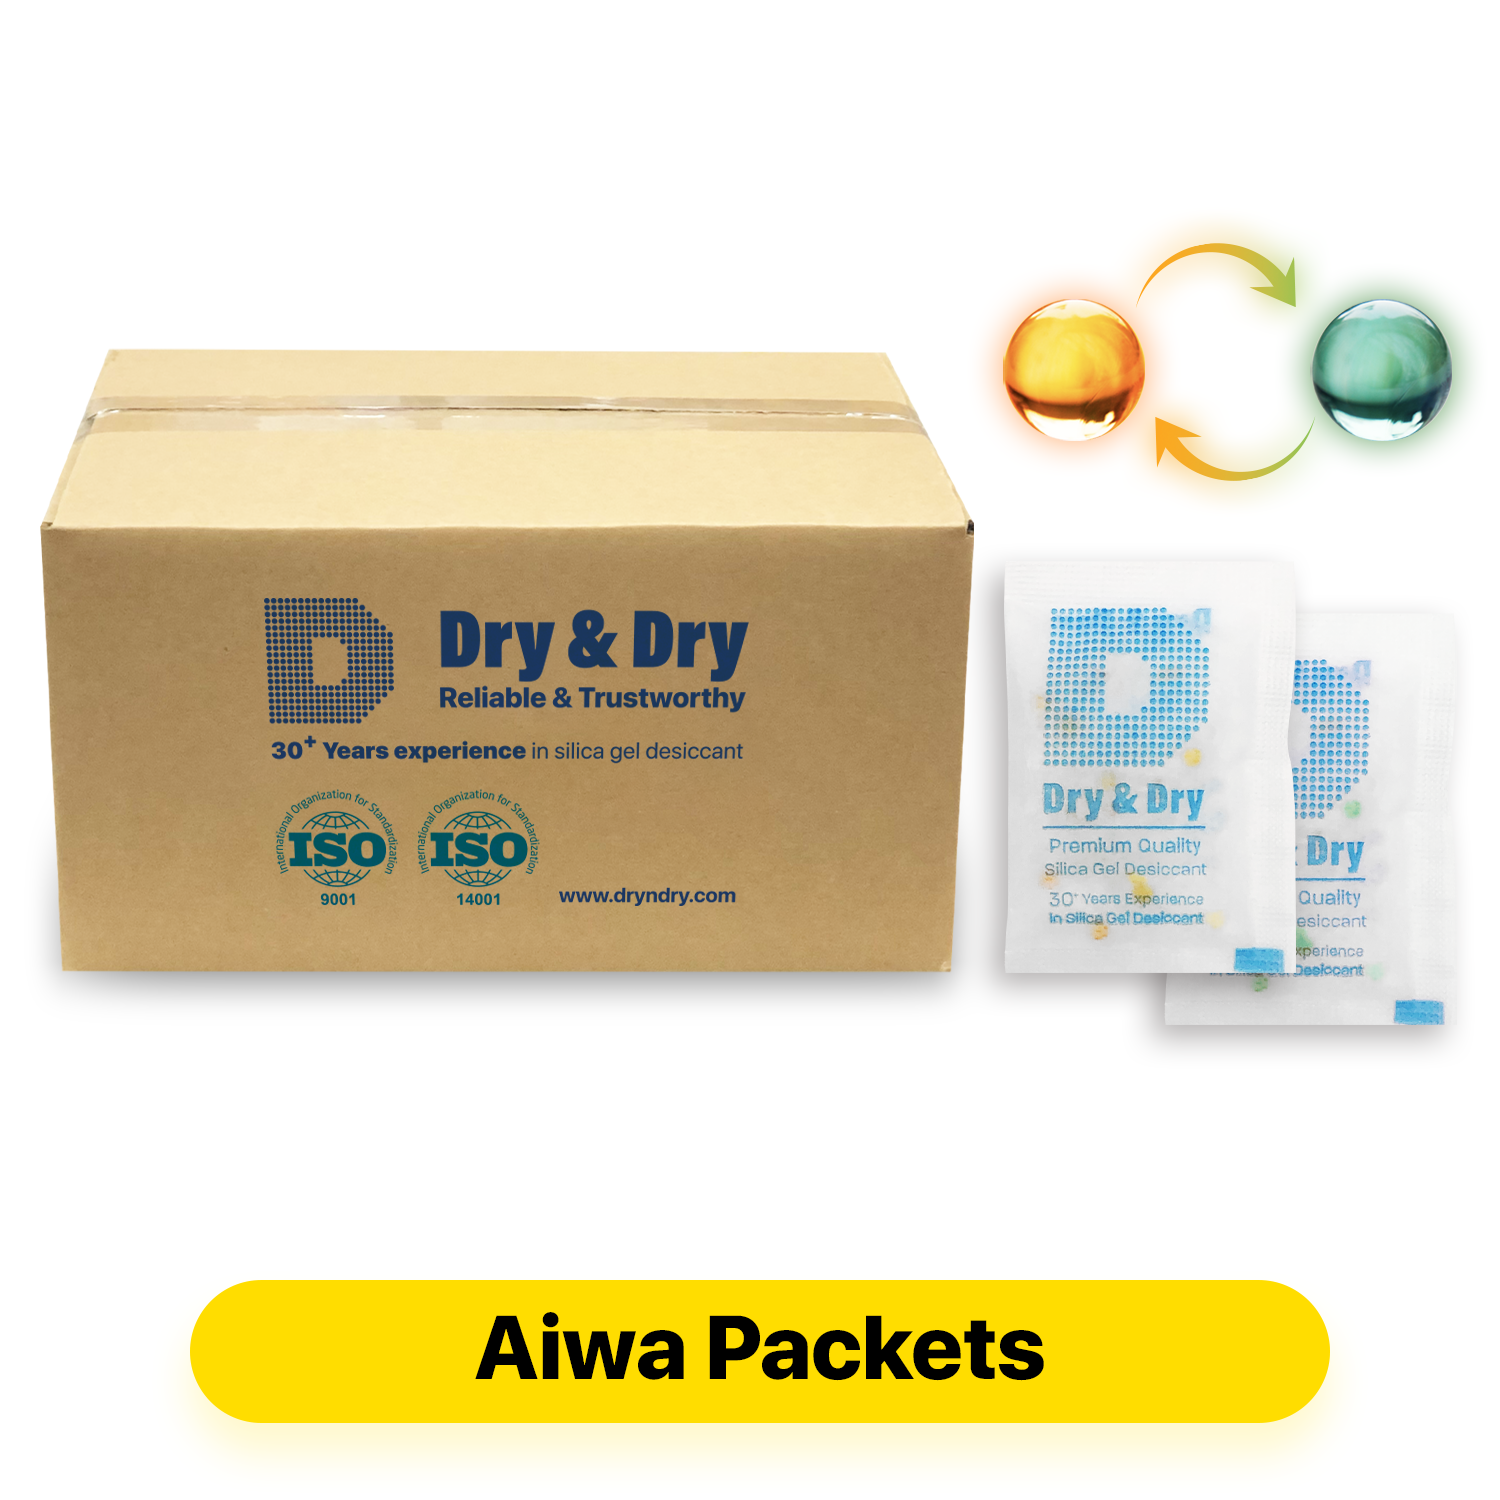 5 Gram [3000 Packs] "Dry & Dry" Food Safe Orange Indicating(Orange to Dark Green) Mixed Silica Gel Packets - FDA Compliant